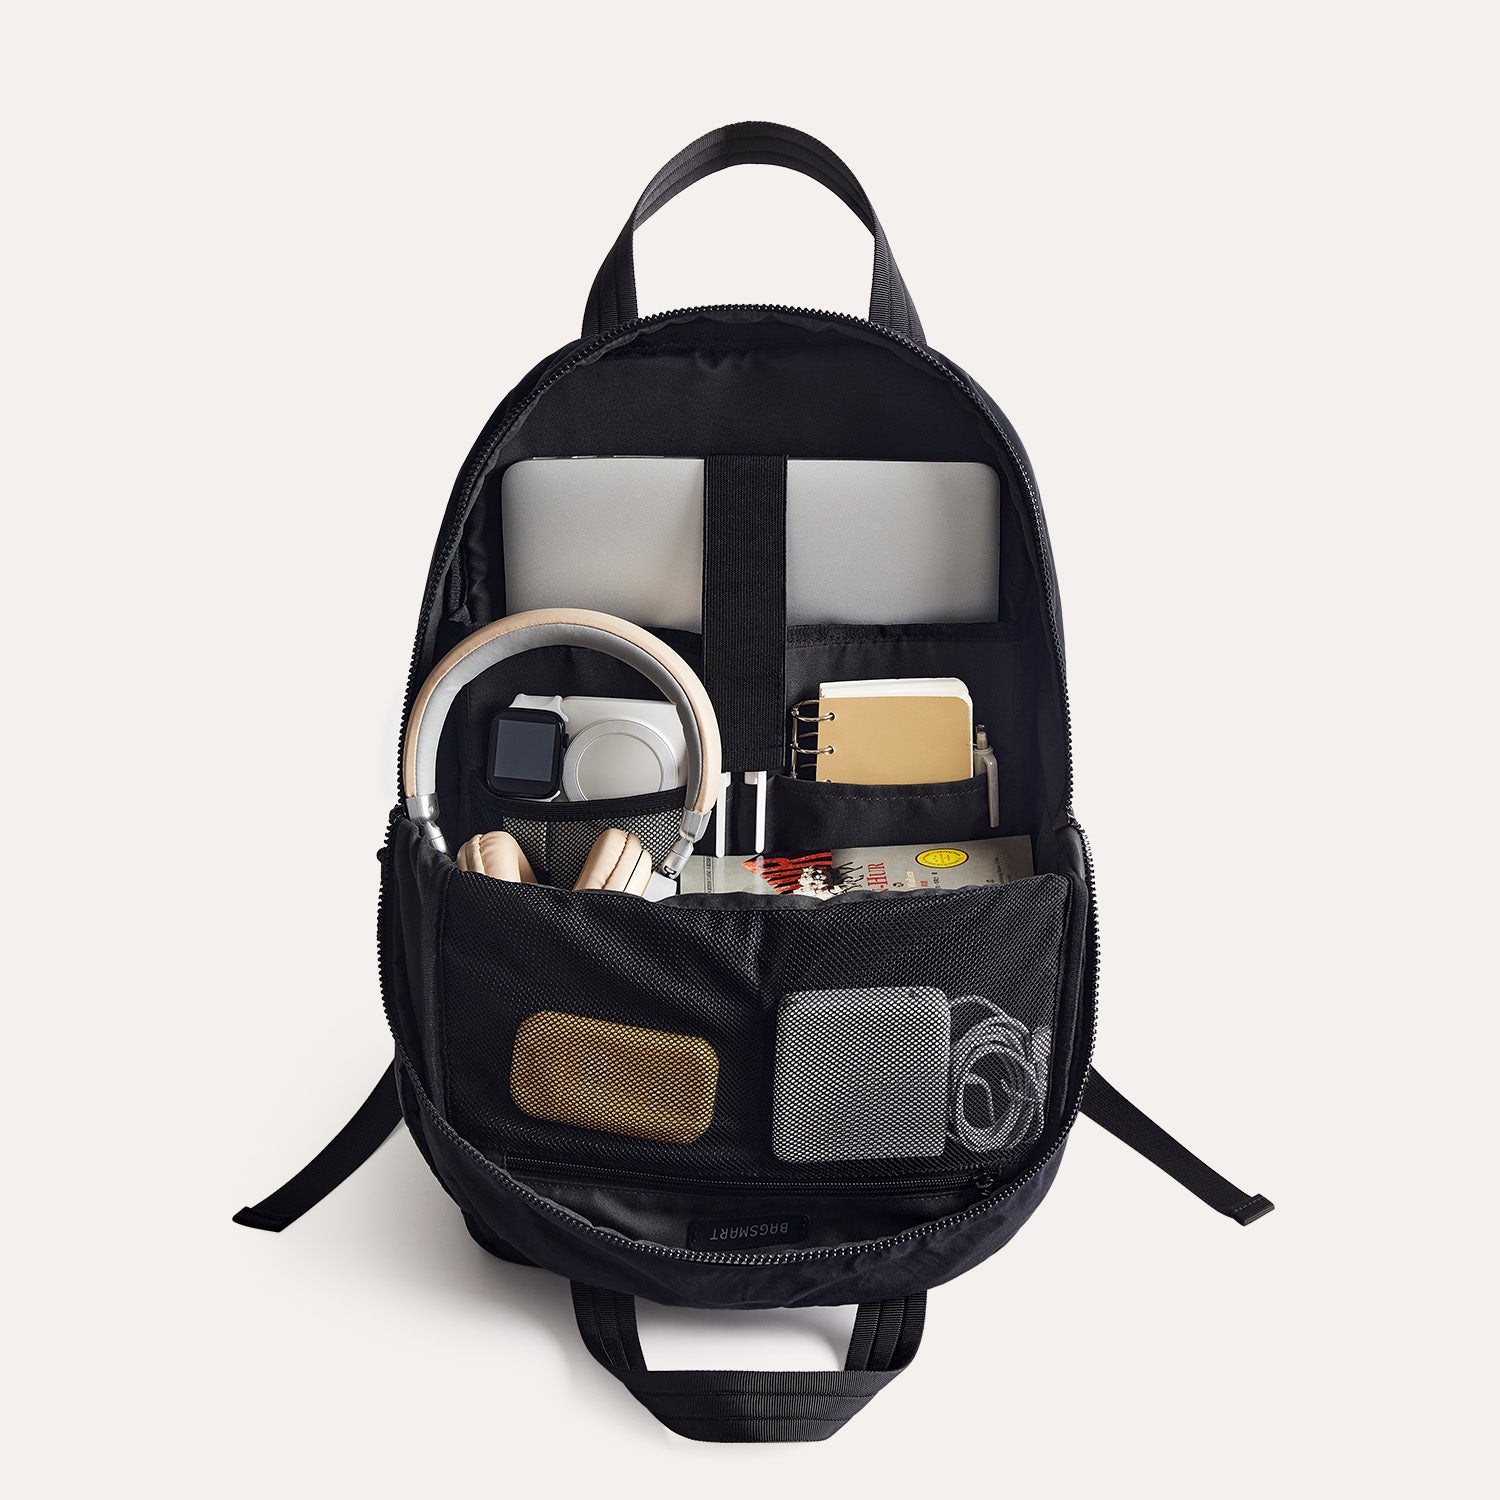 Vega Backpack